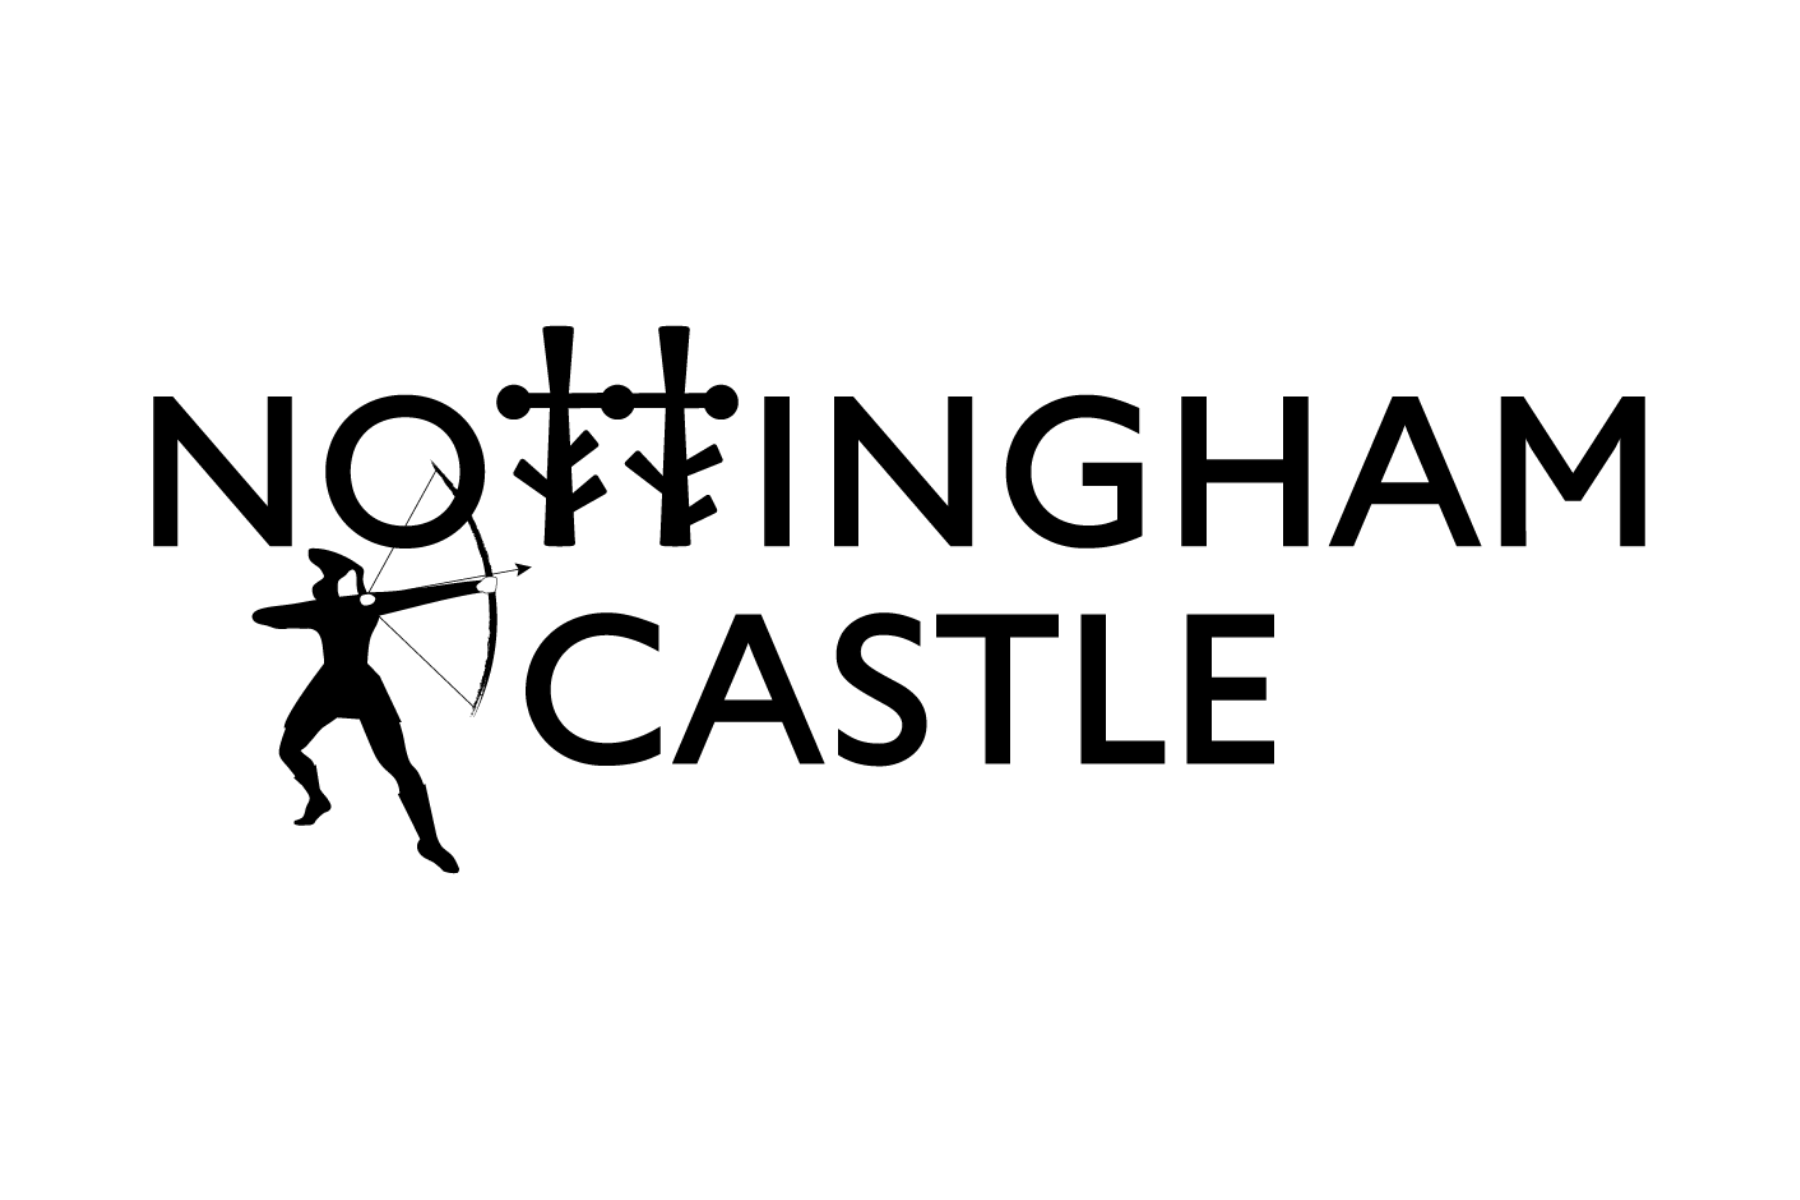 Nottingham castle trust